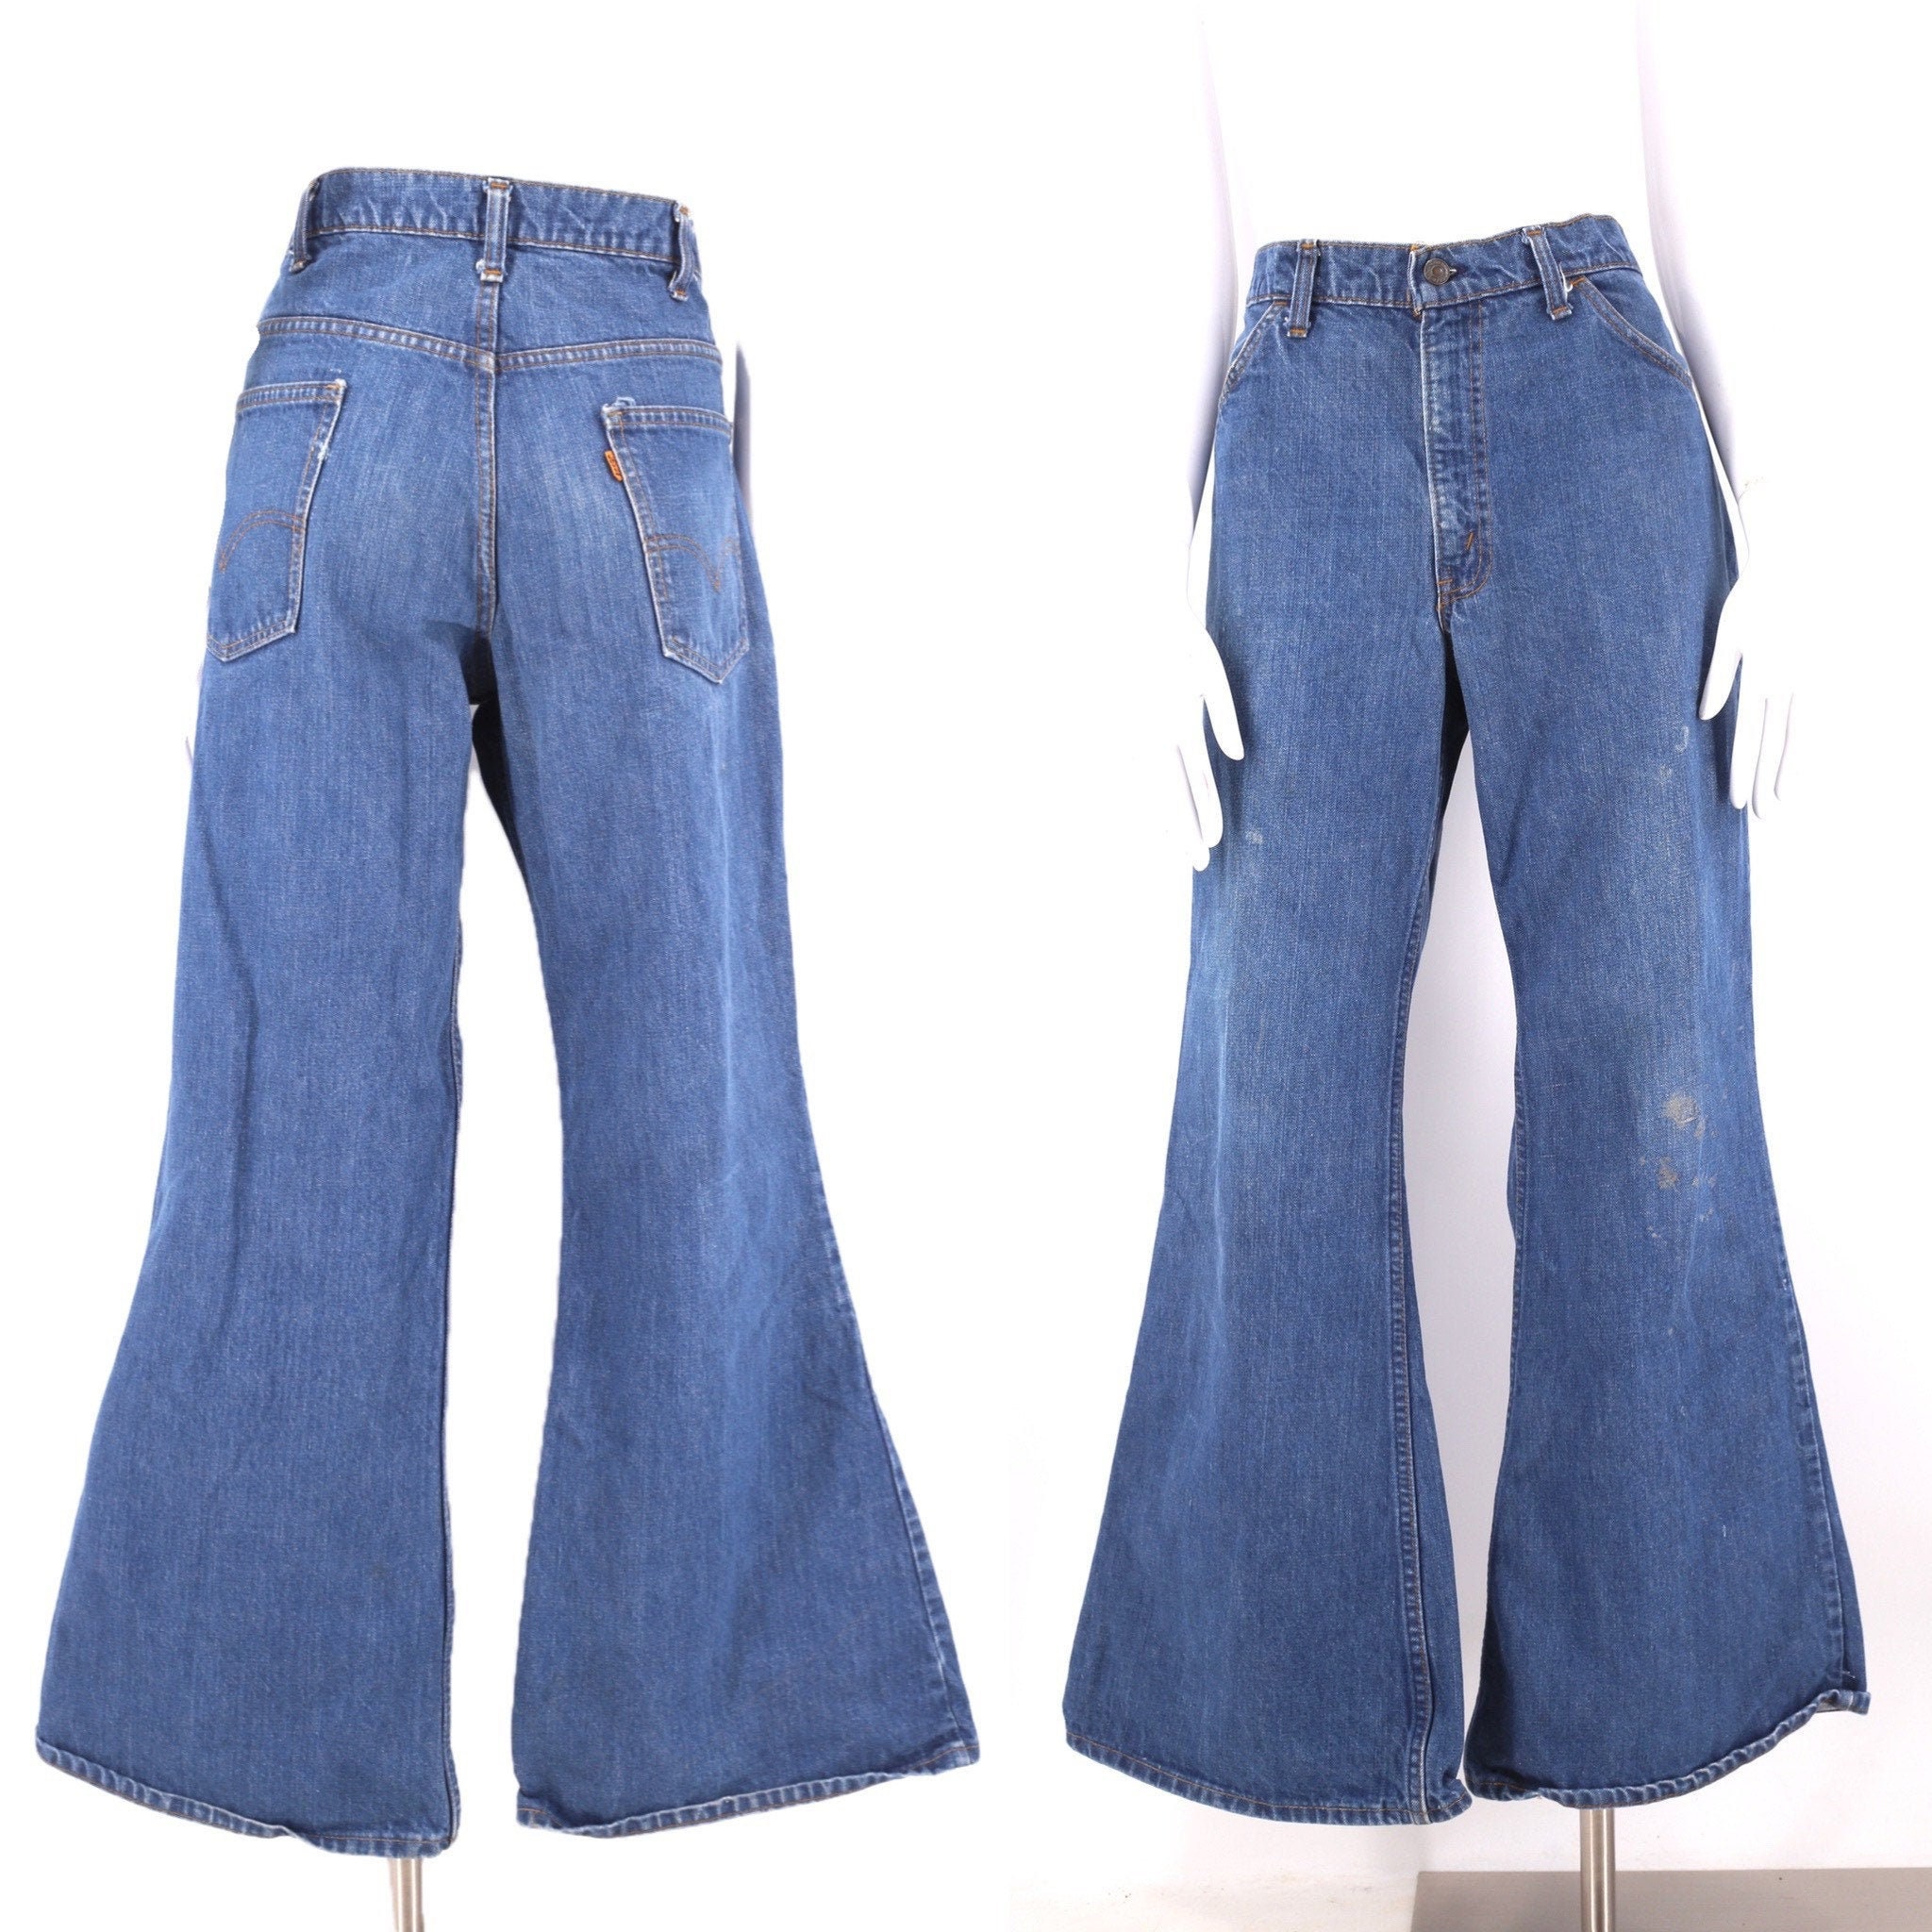 70s 80s LEVIS 517 Orange Tab high waist bell bottom jeans 36 / vintage  1970s 1980s vintage Levis flares pants 36 x 30